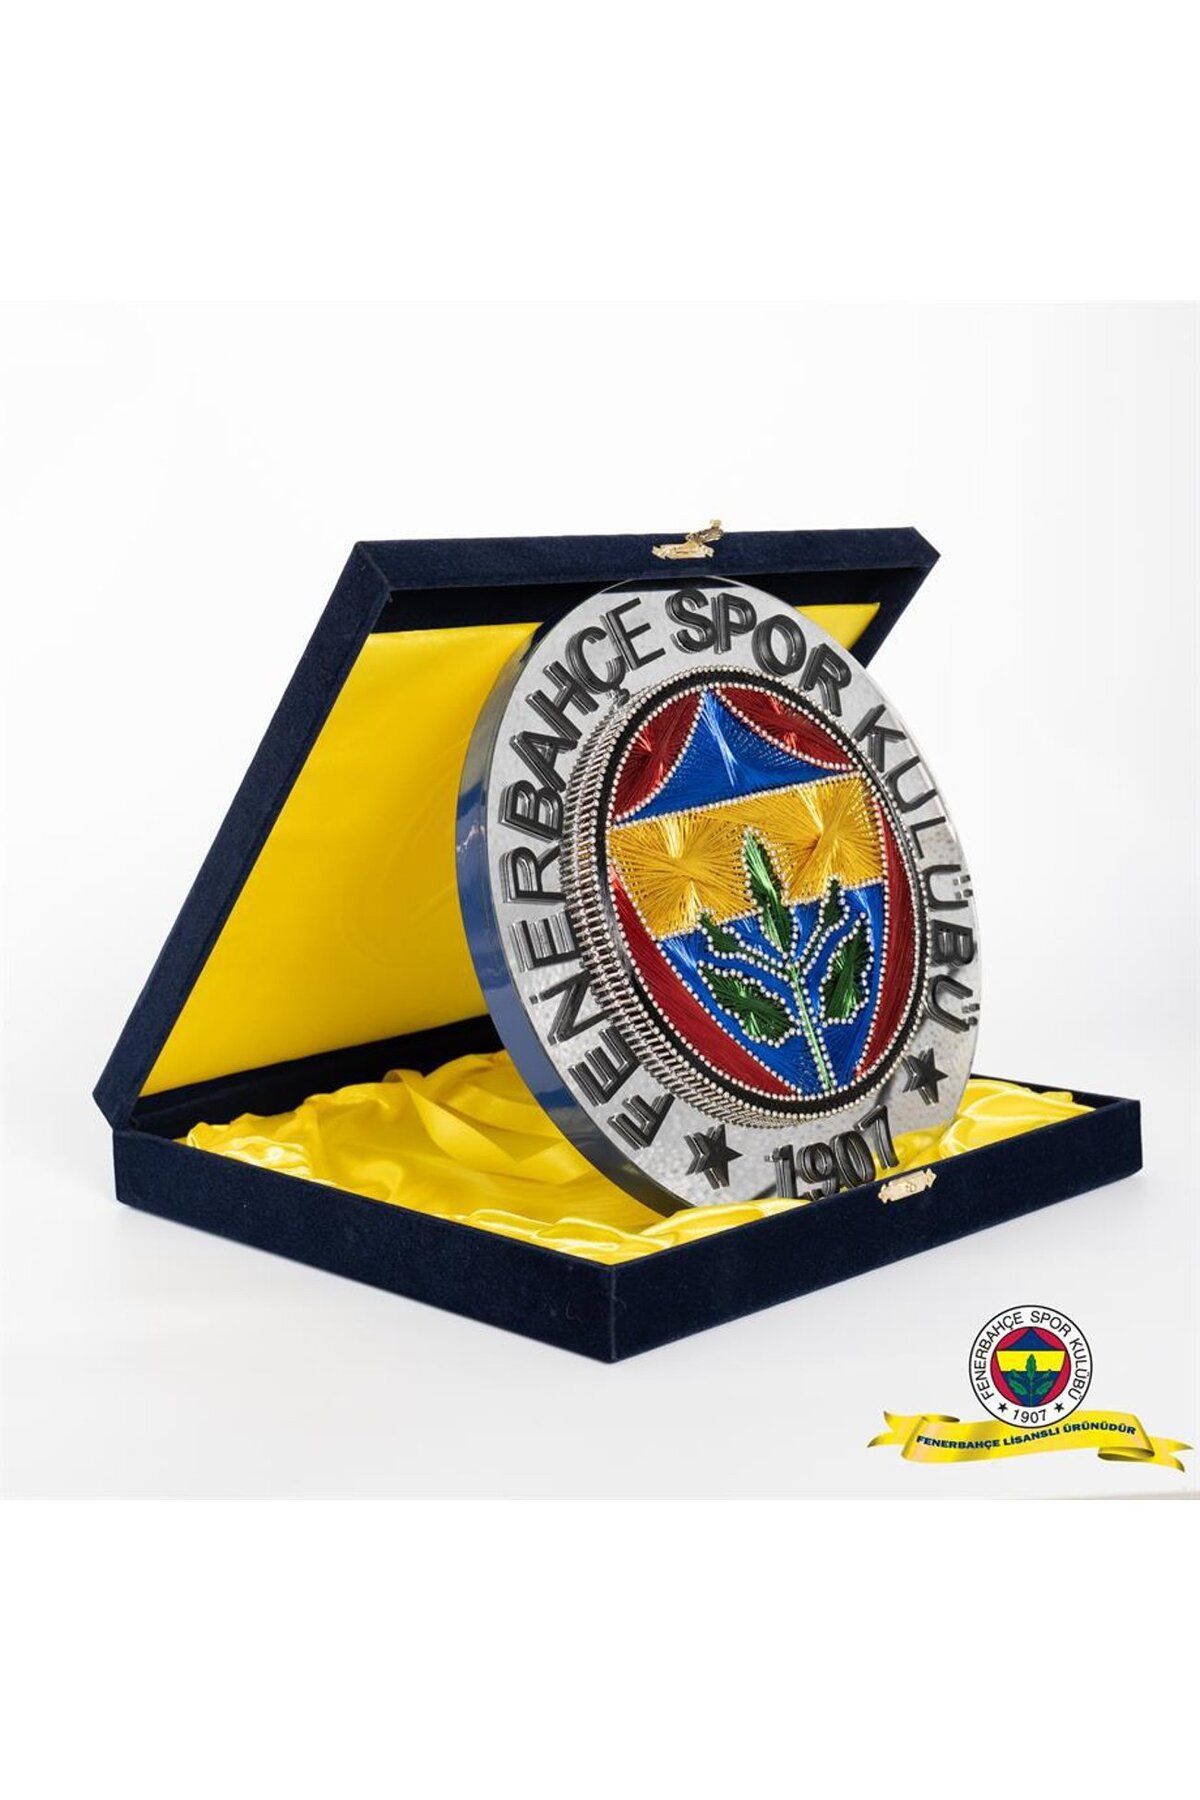 Fenerbahçe Lisanslı Filografi Amblem Plaket Tablo.